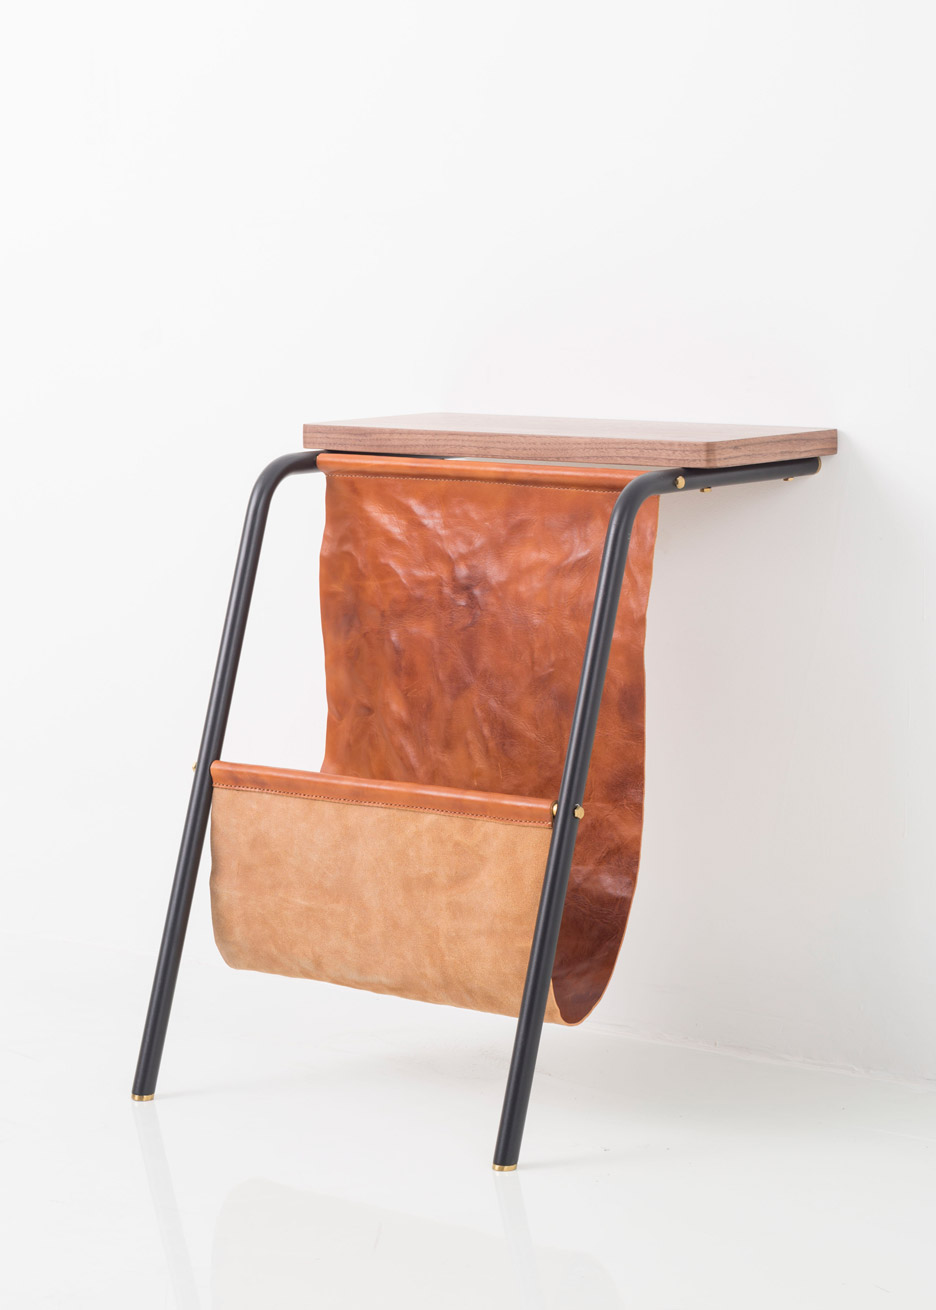 valet-collection-david-rockwell-group-stellar-works-furniture-milan-2016-product-design_dezeen_936_0_dezeen_936_9